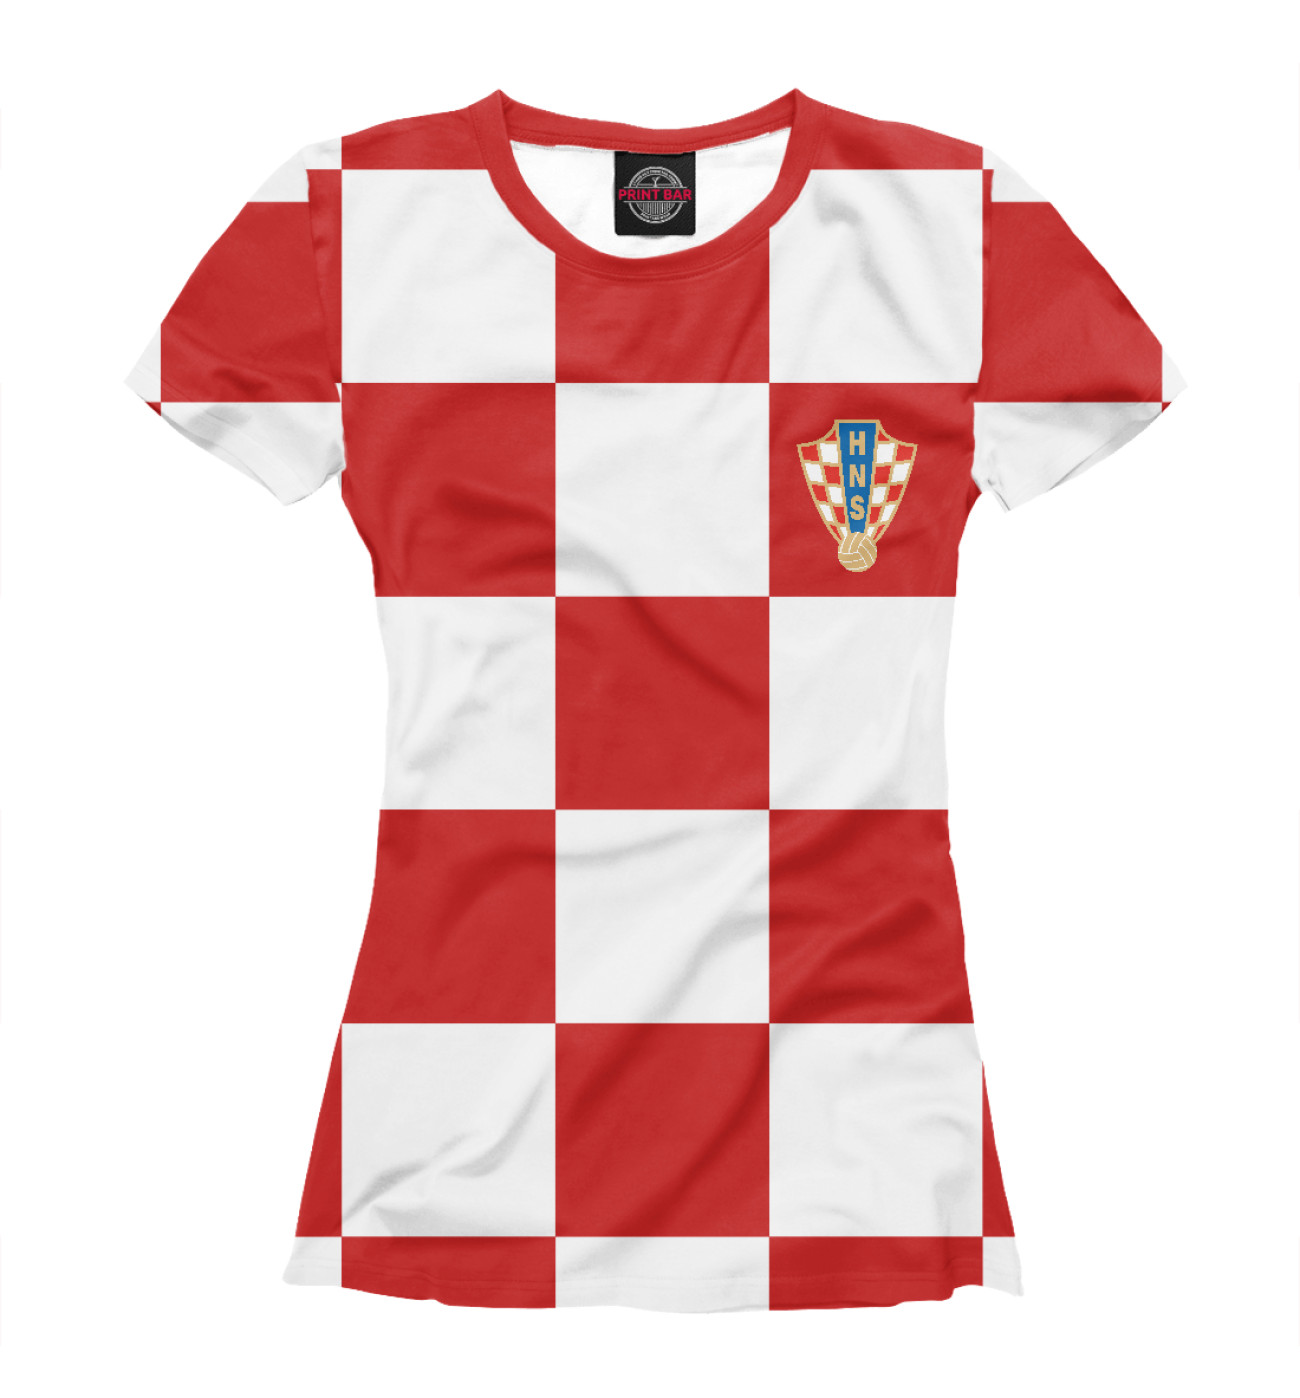 Женская Футболка Сборная Хорватии 2018, артикул: FNS-744163-fut-1